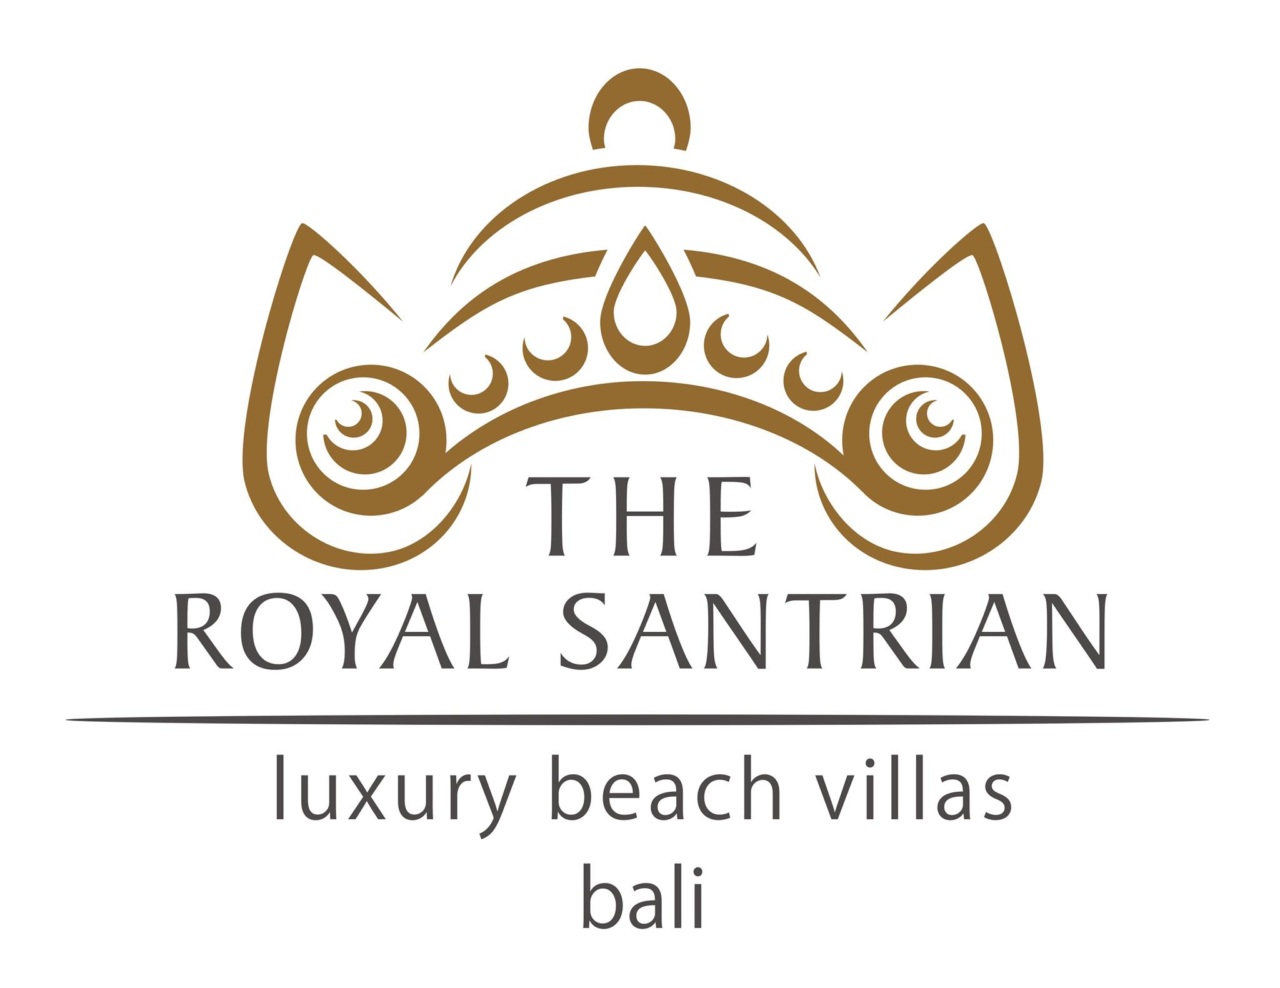 Royal-Santrian-logo-1-1280x988.jpg